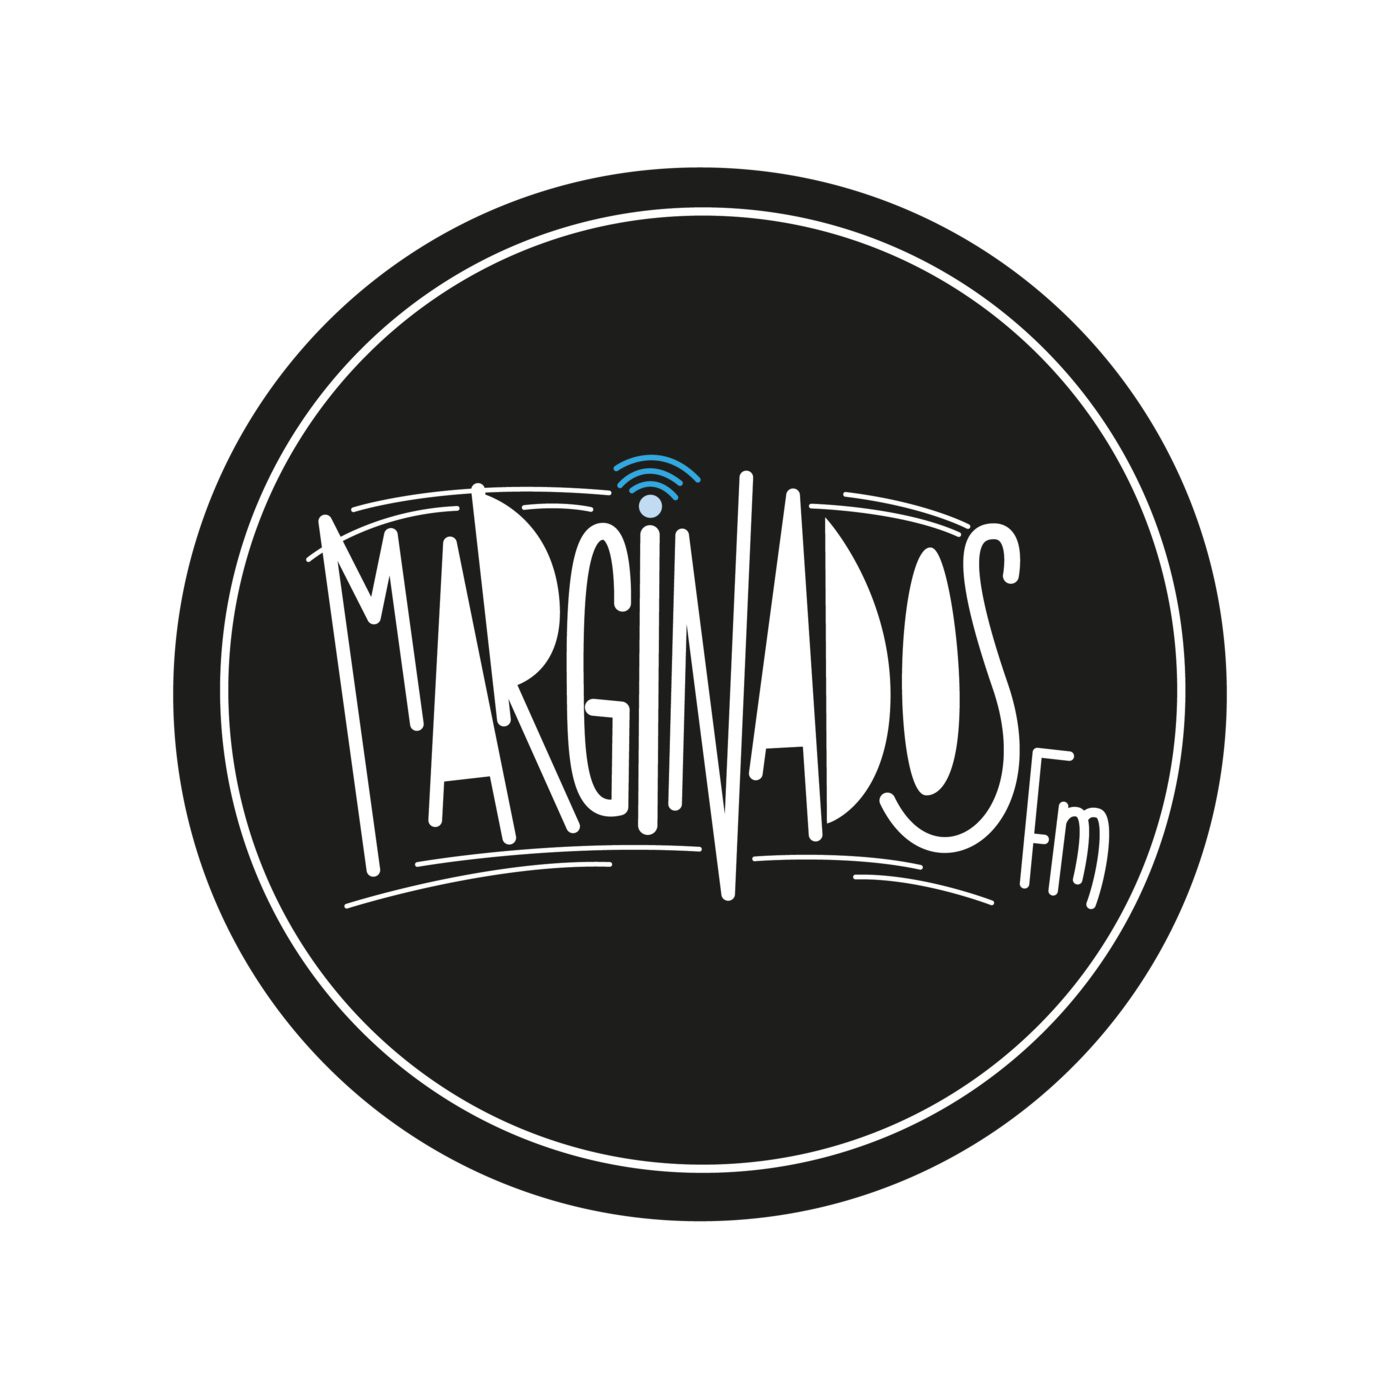 Marginados fm 03-06-14